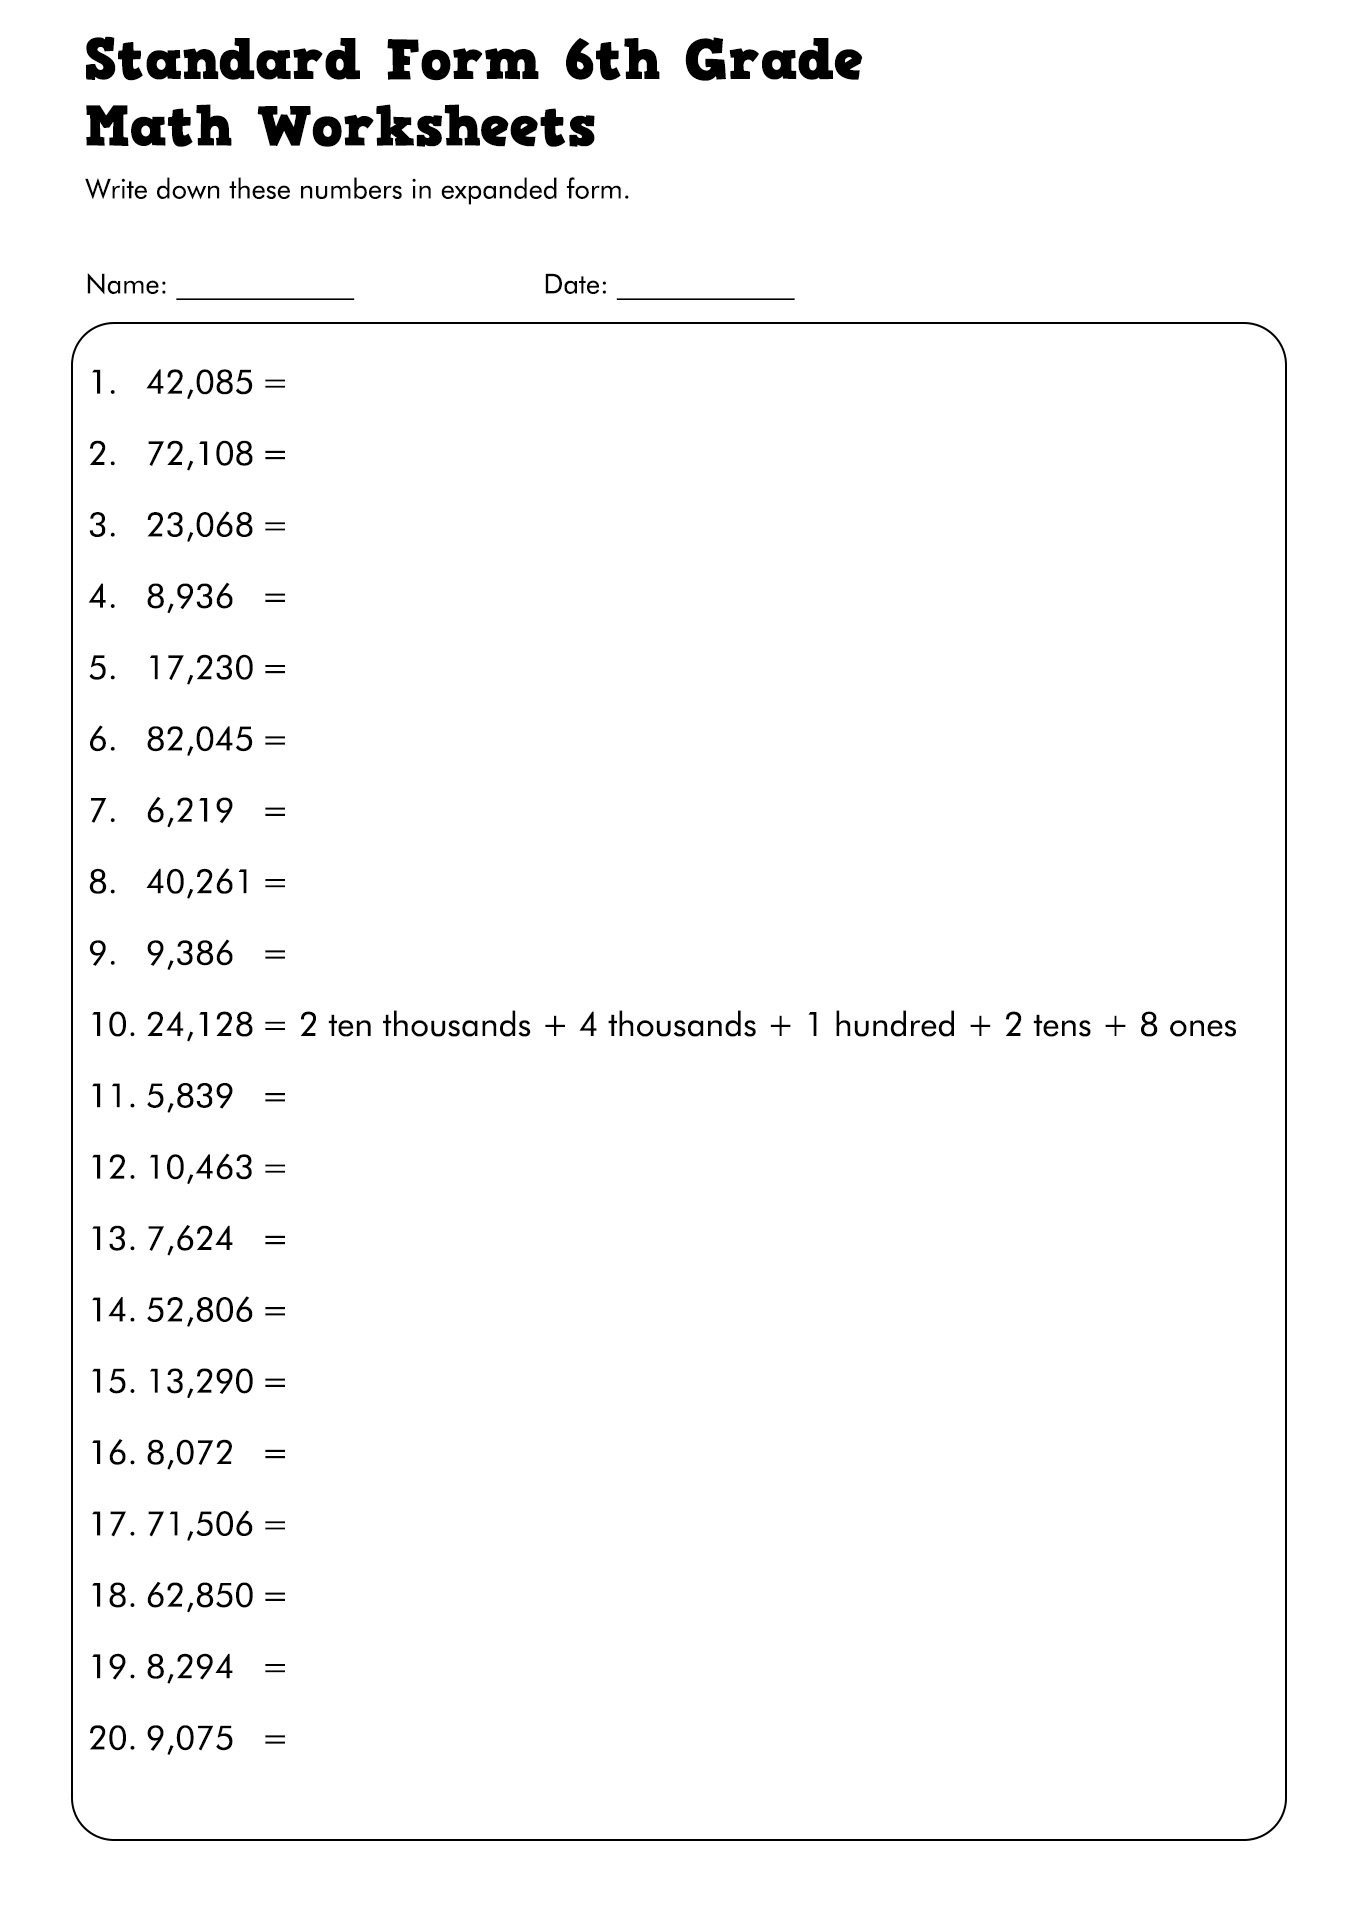 Standard Form 6th Grade Math Worksheets